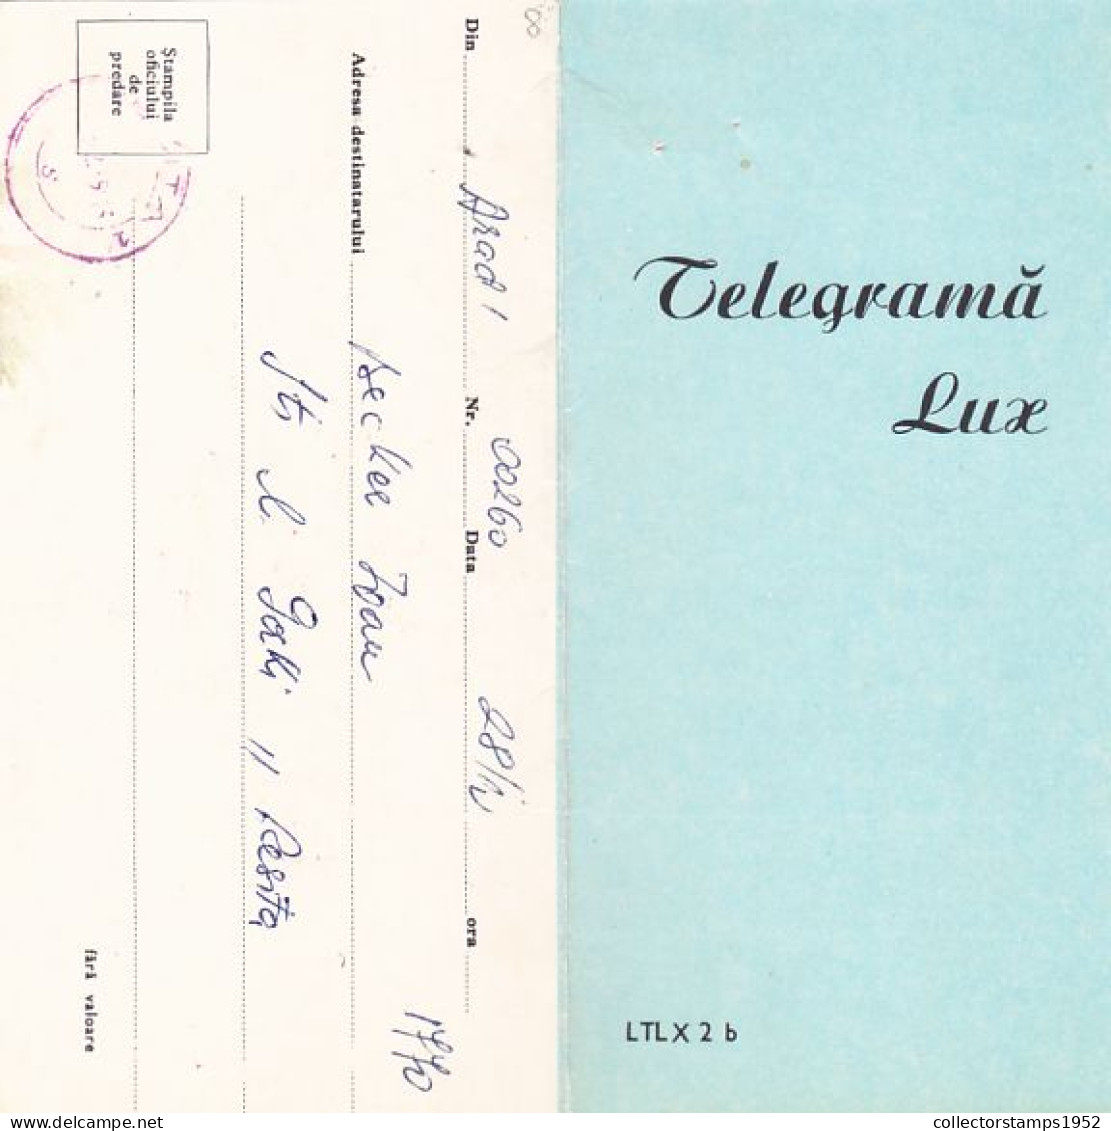 BOY IN FOLKLORE COSTUME, LUXURY TELEGRAM, TELEGRAPH, 1975, ROMANIA - Telegraphenmarken